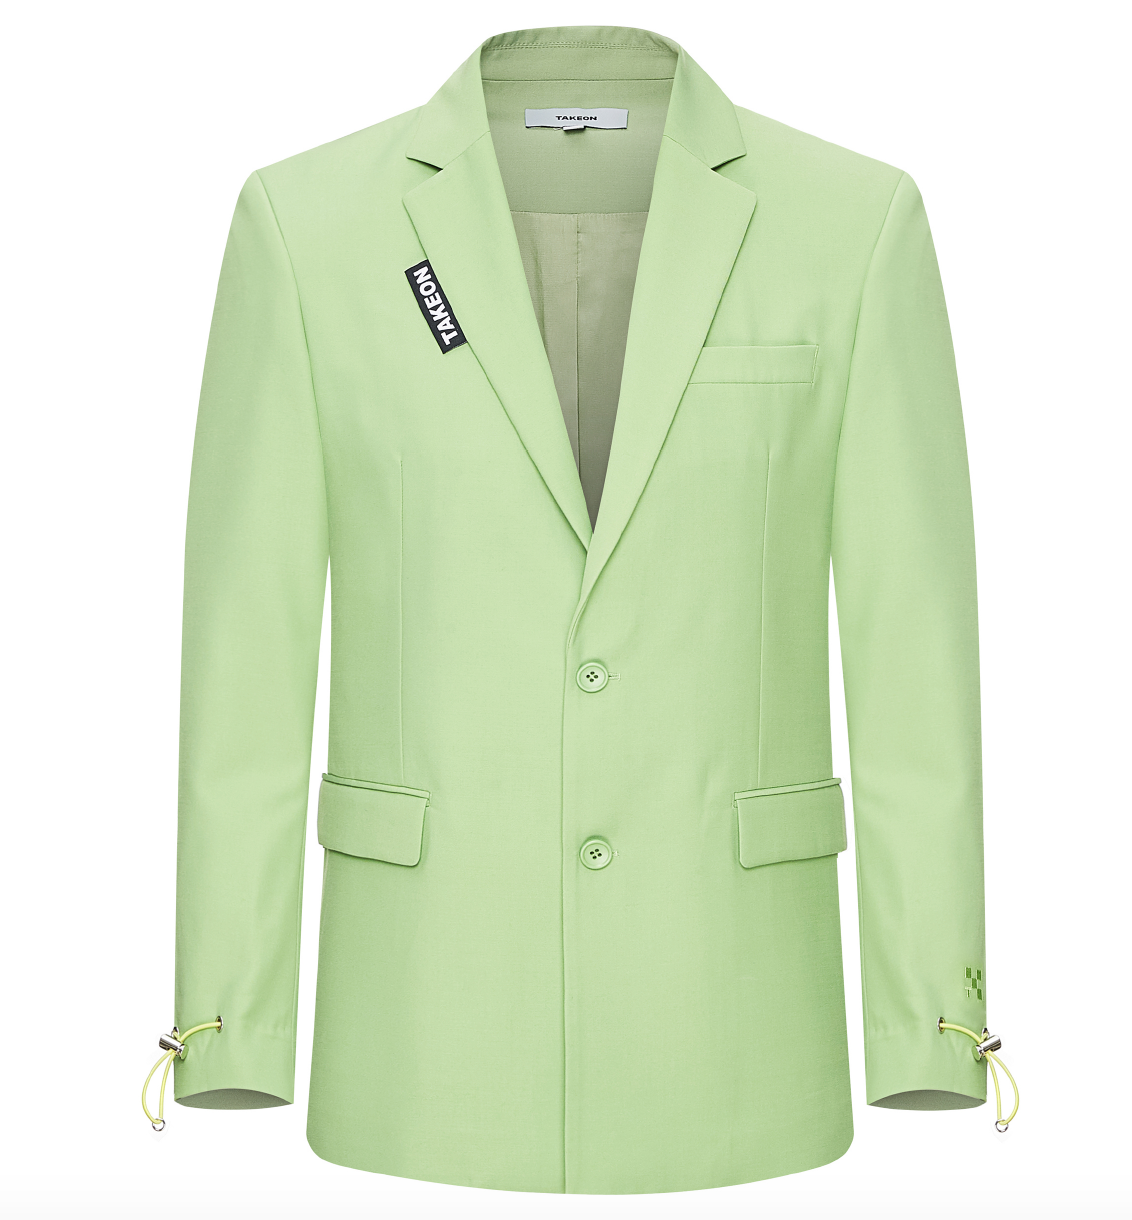 Shop Keke Palmer’s Sporty Unisex Green Blazer